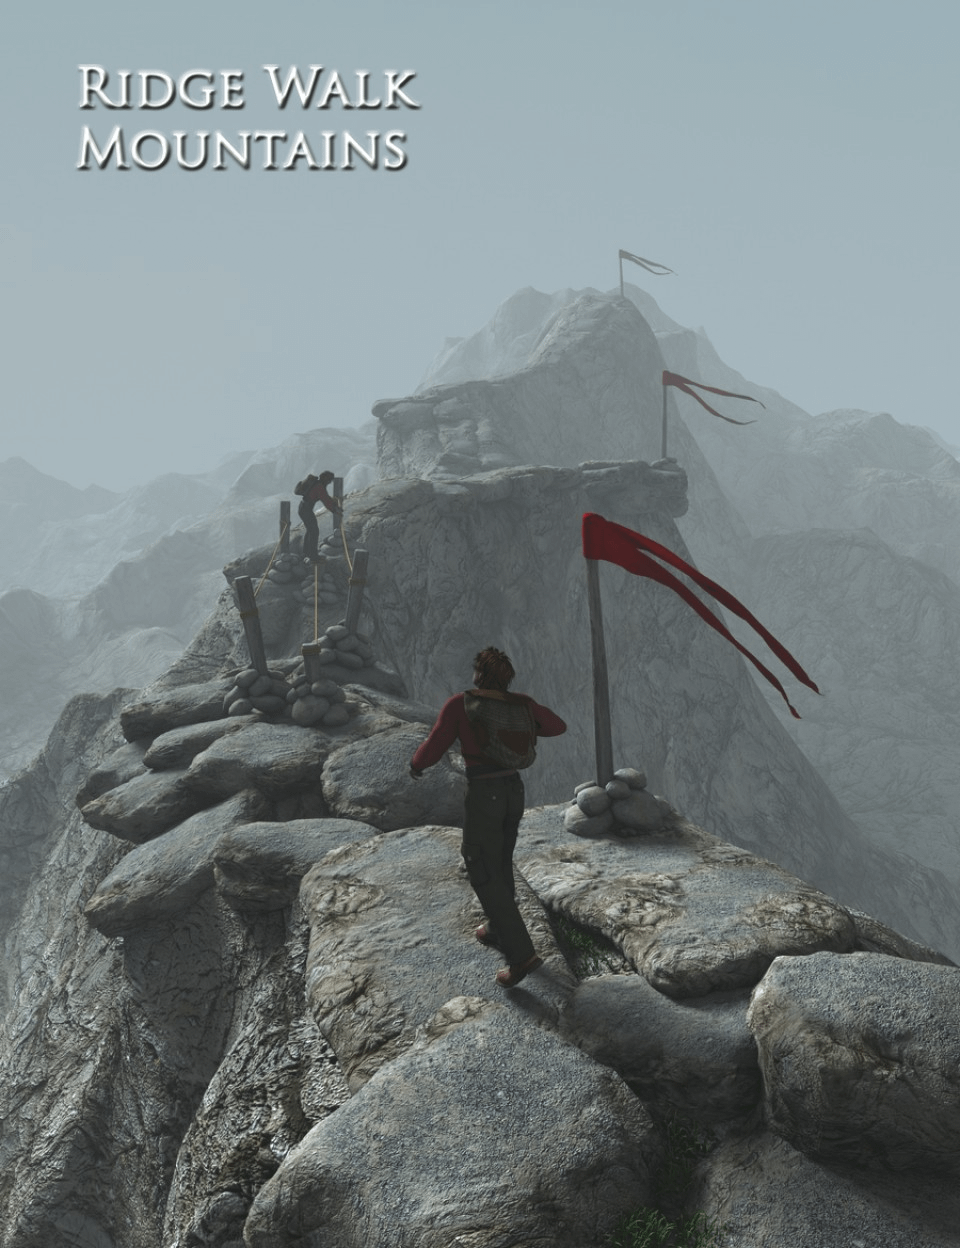 daz ridge walk mountains showing flags